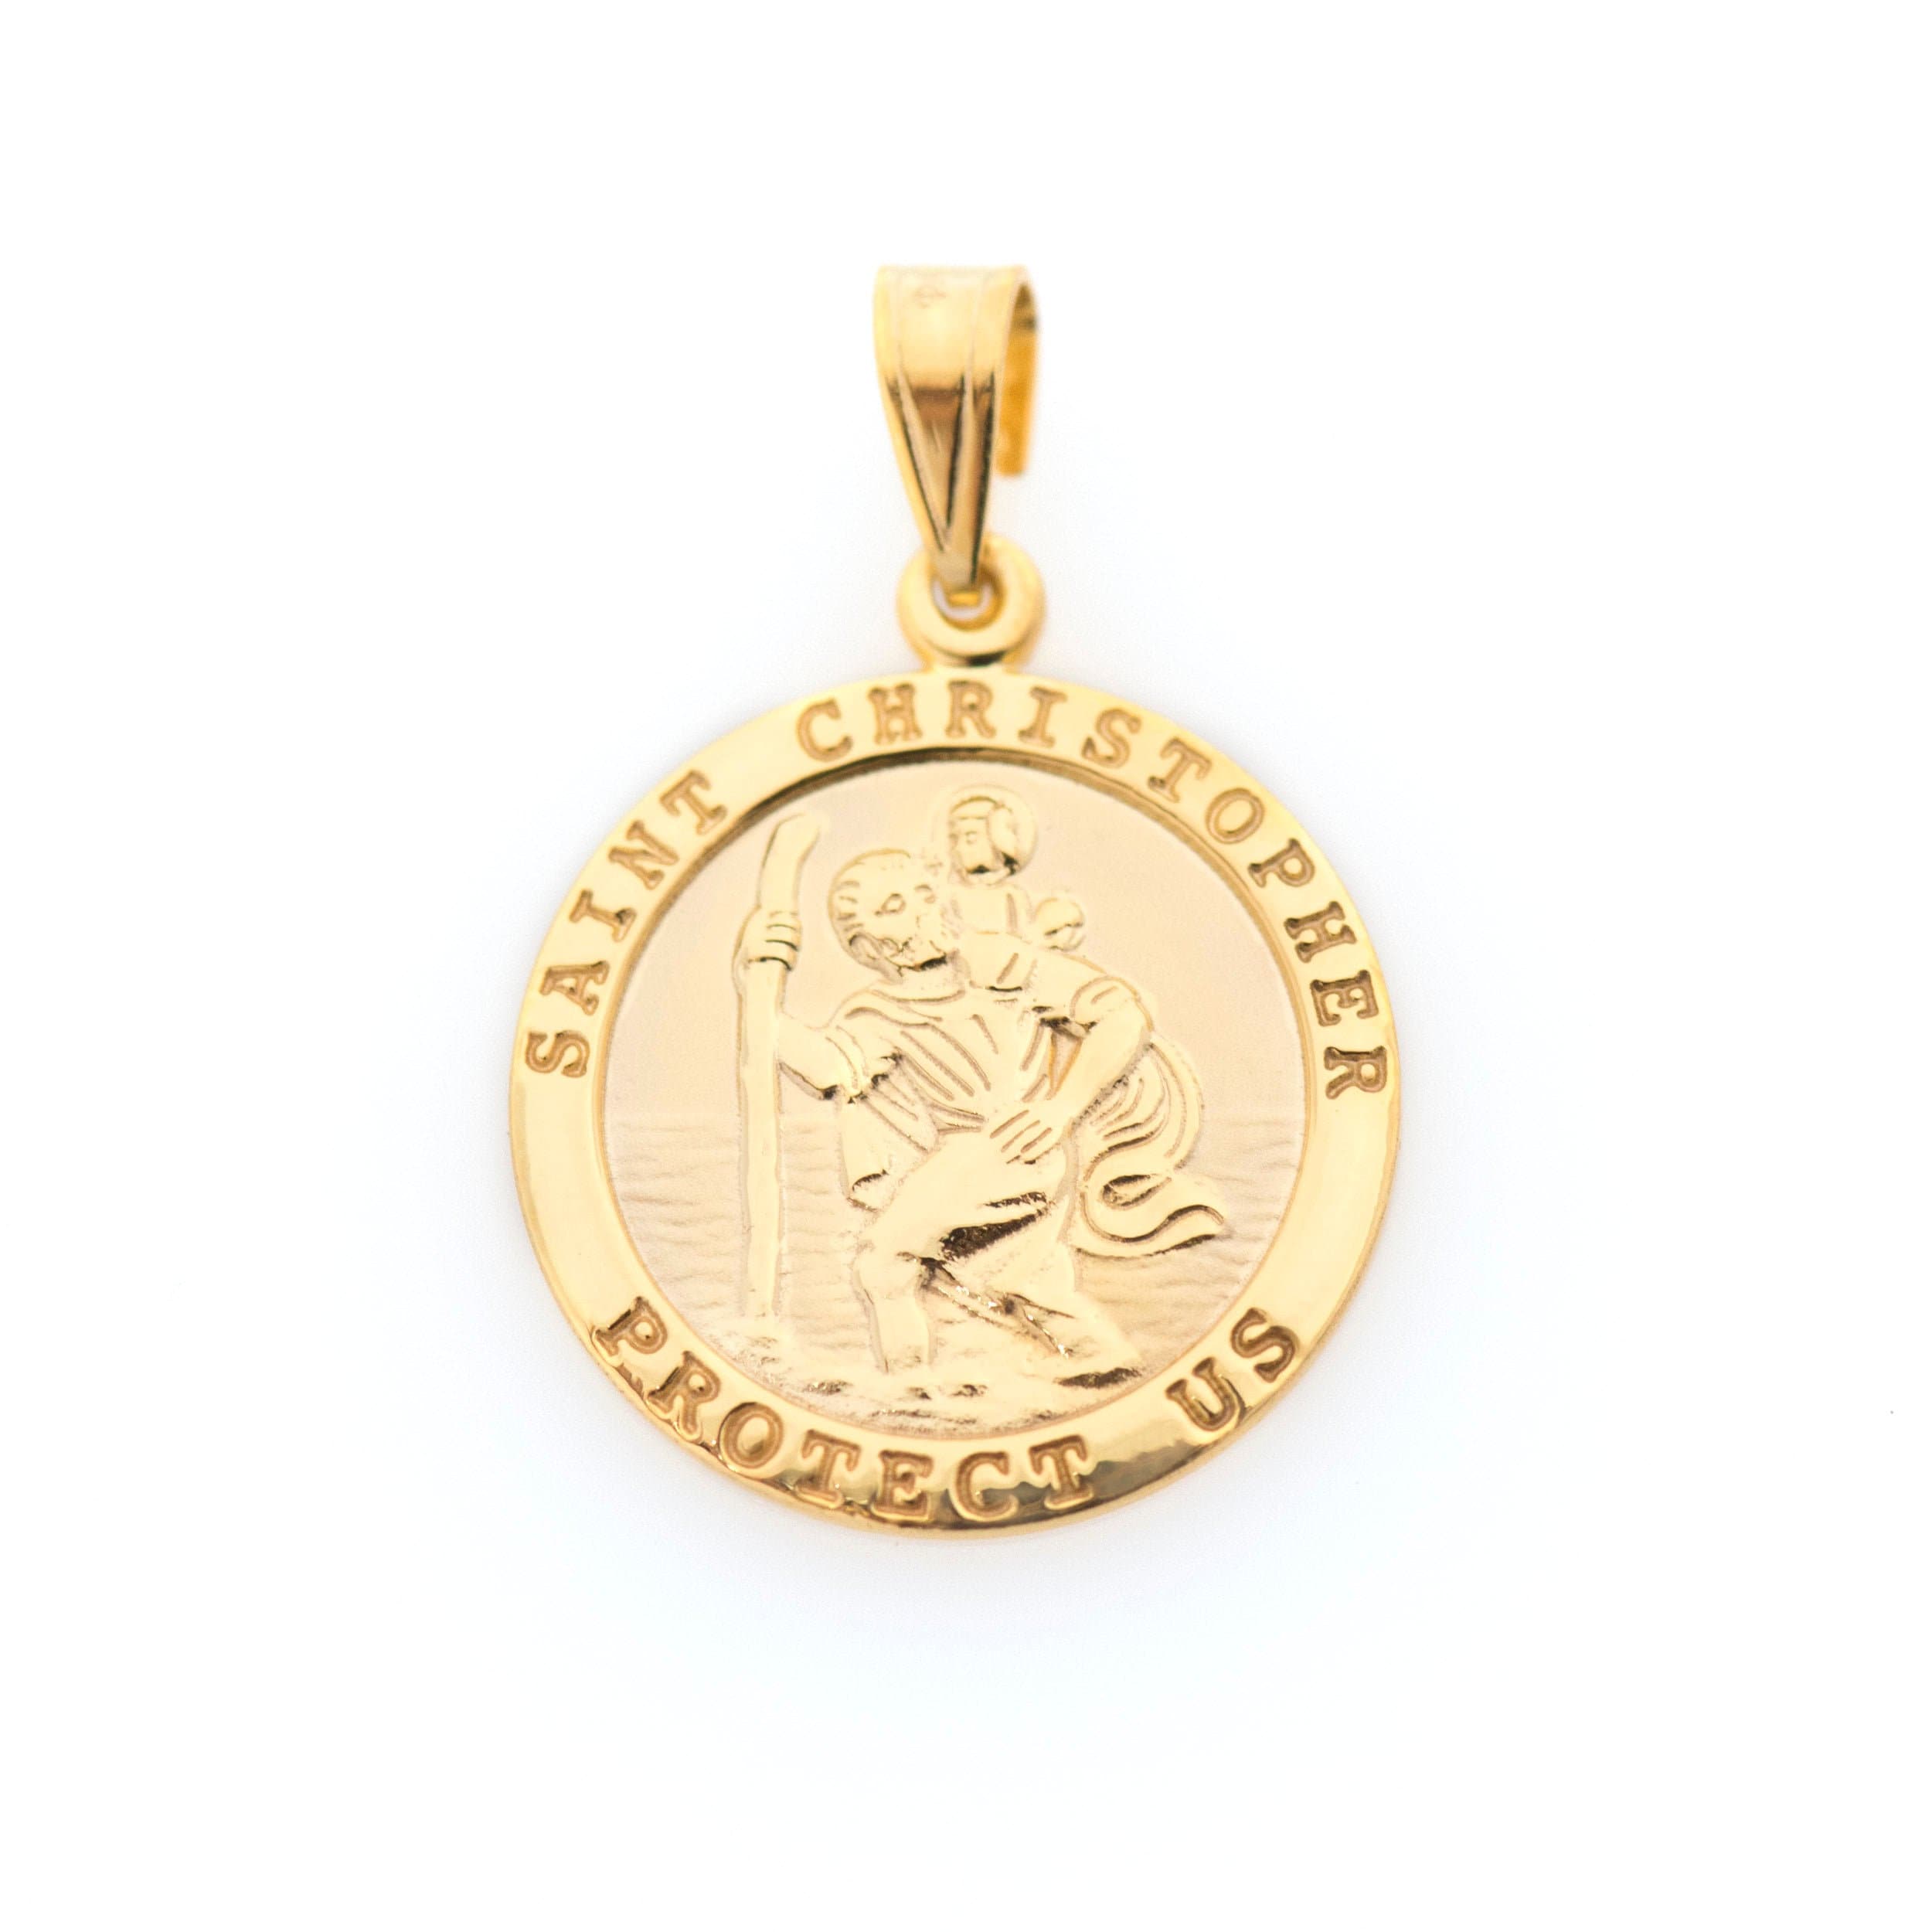 GOLD Saint san st christopher pendant 14k YELLOW round charm necklace .90”